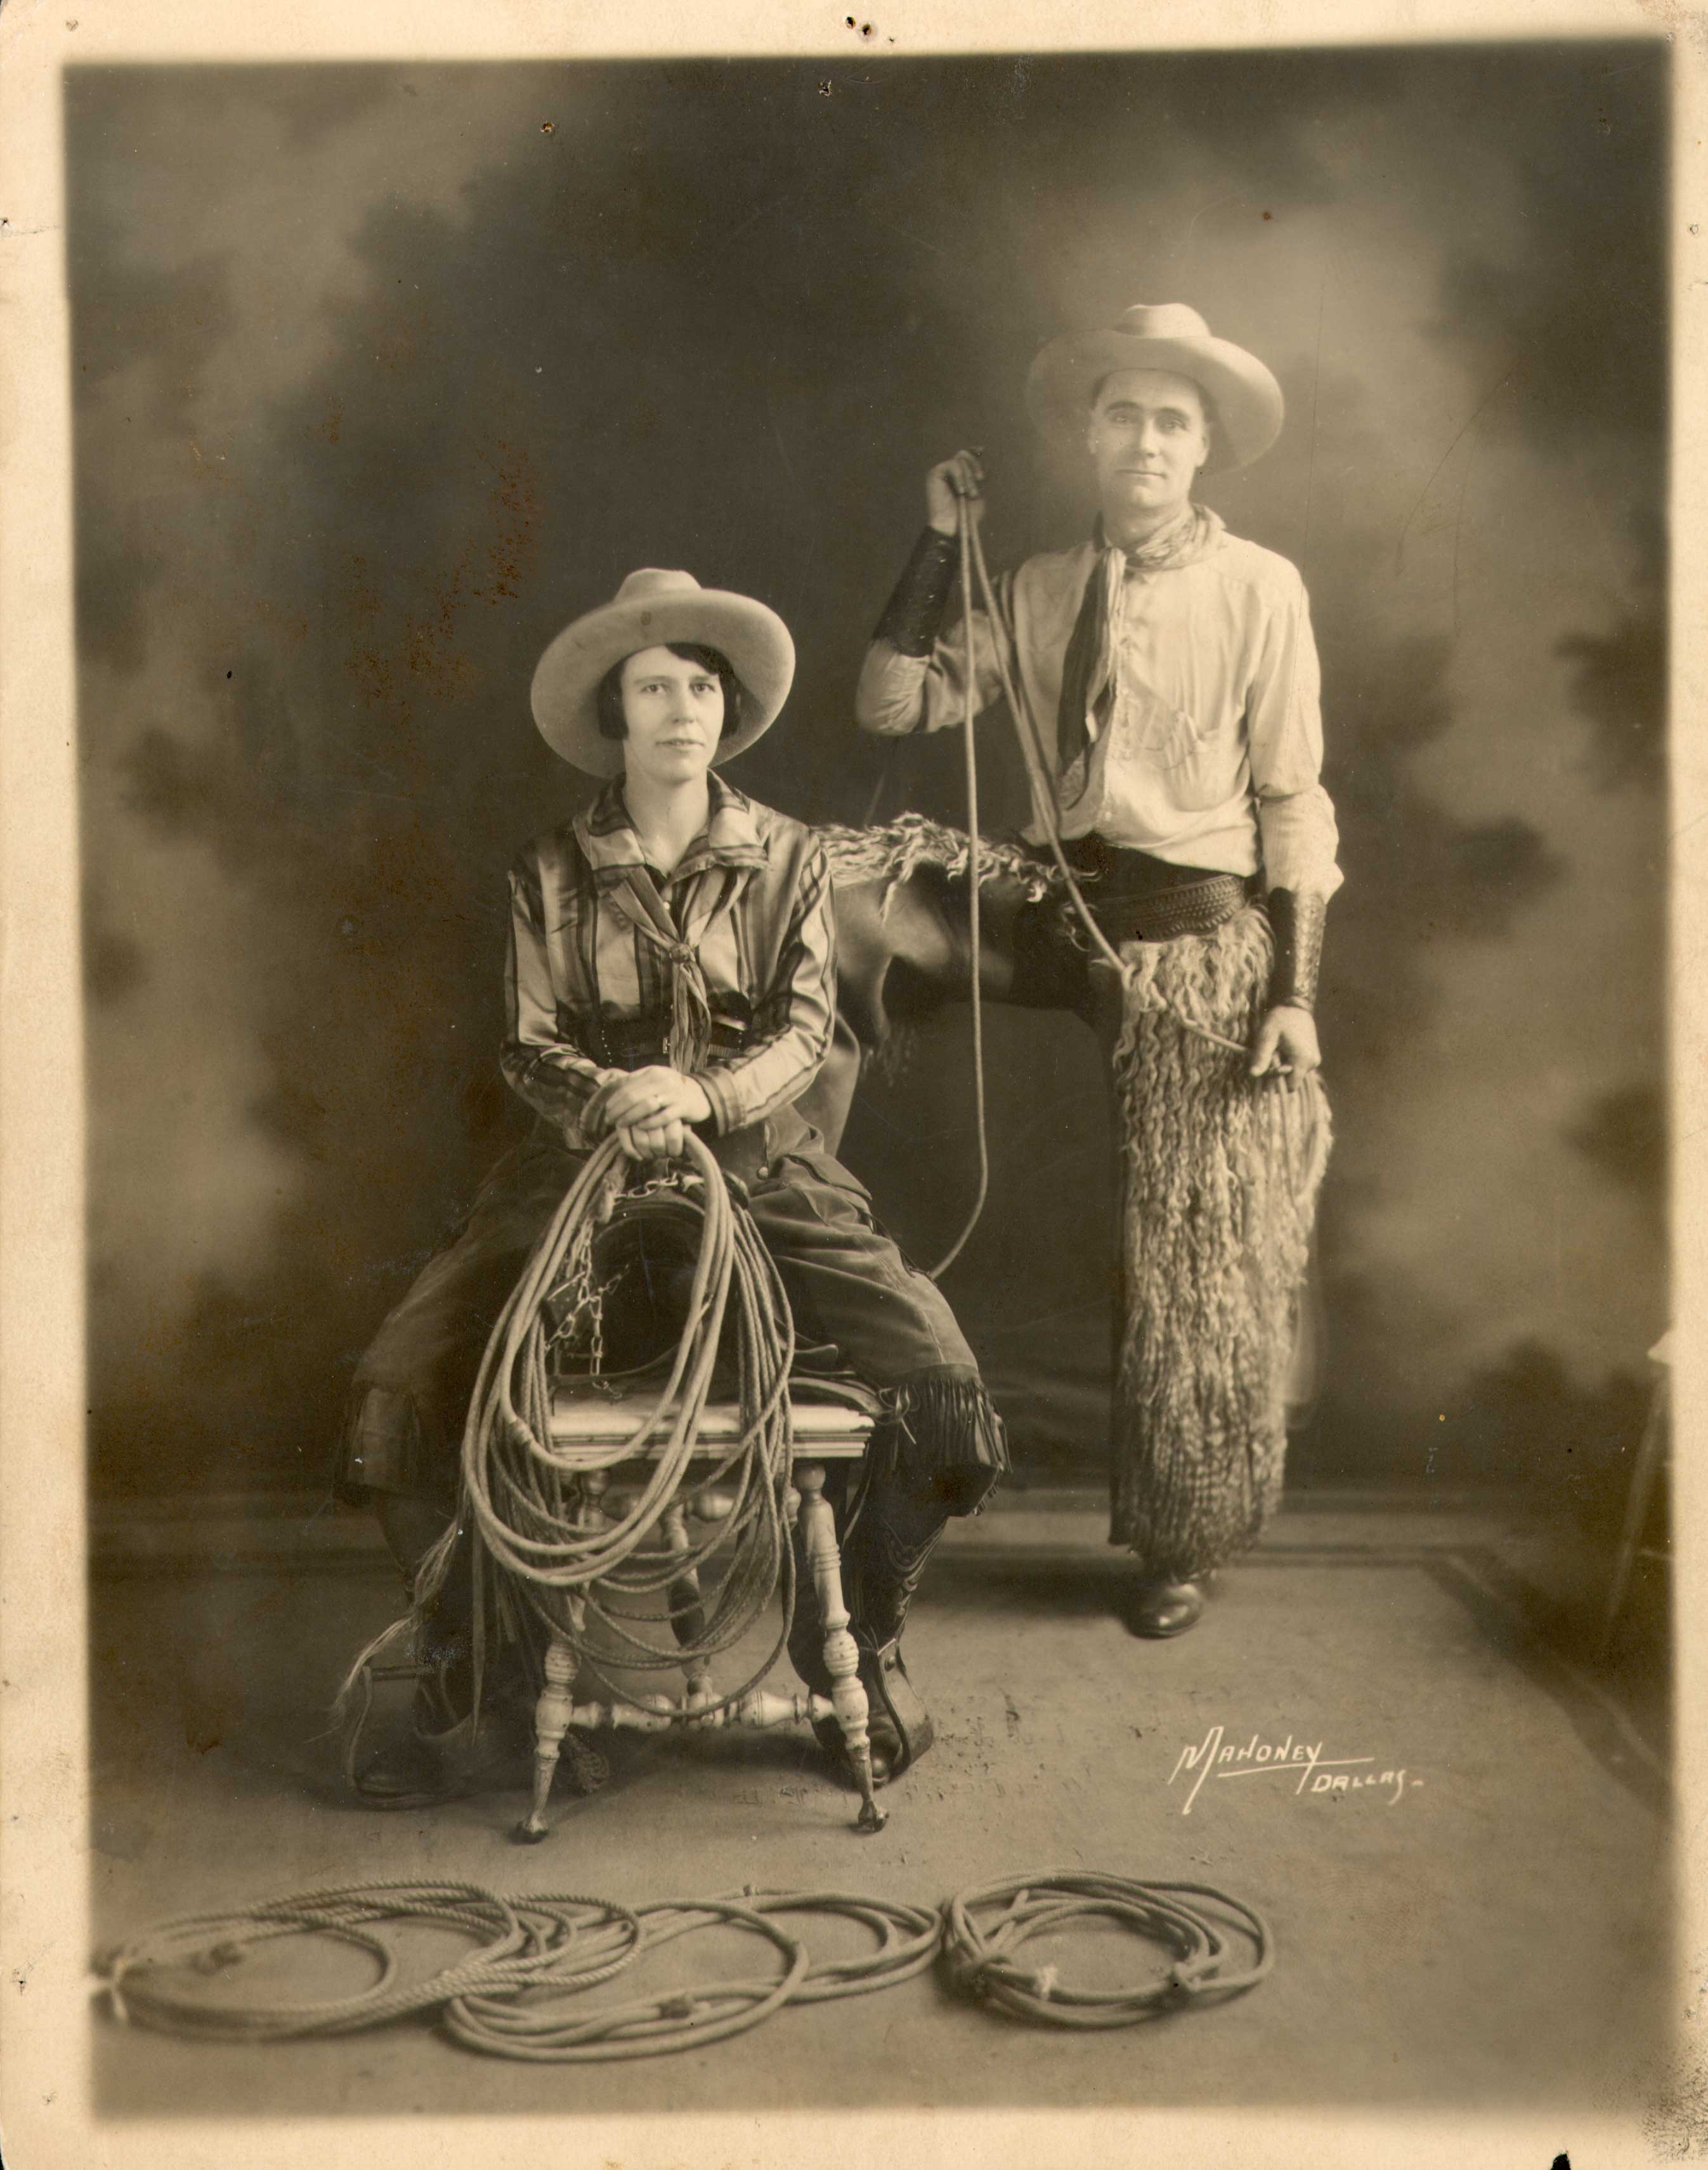 Otto Gray and His Oklahoma Cowboys Band Photographs